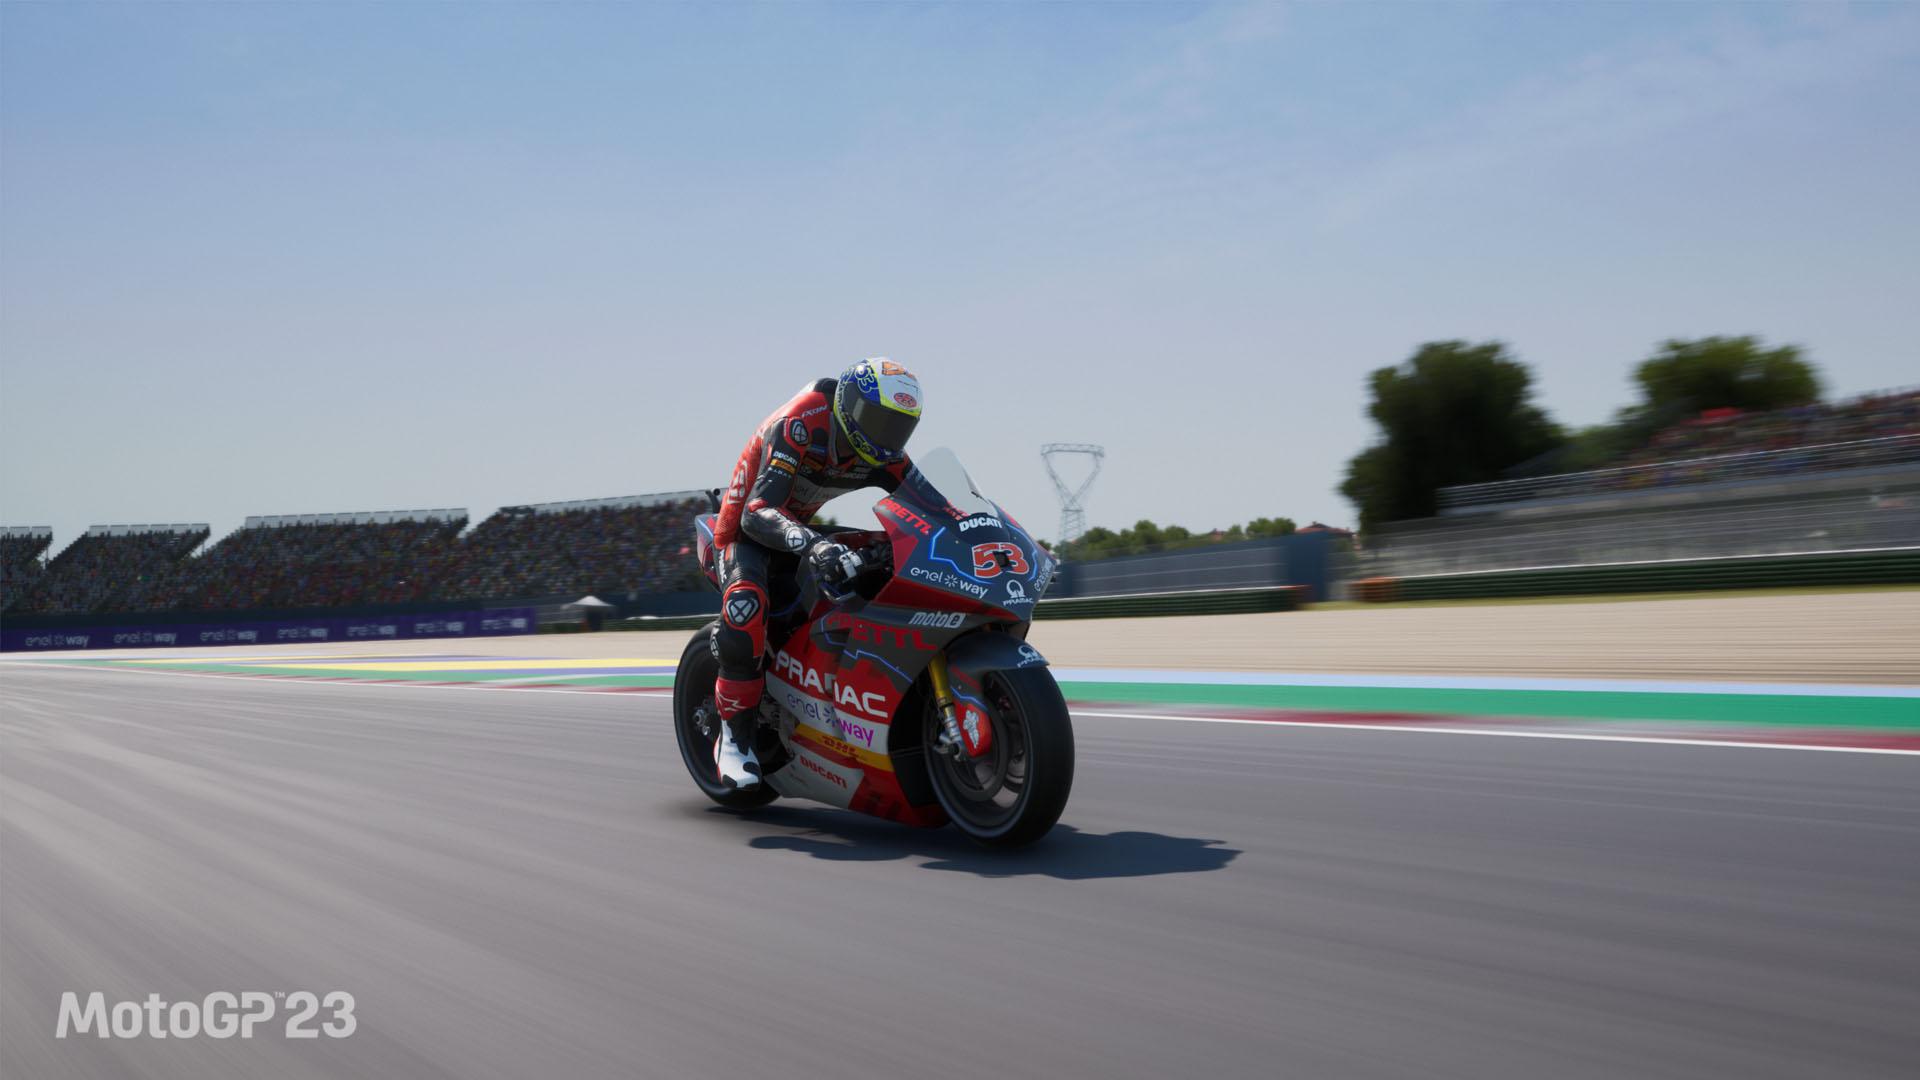 MotoGP 23 update adds electric MotoE series